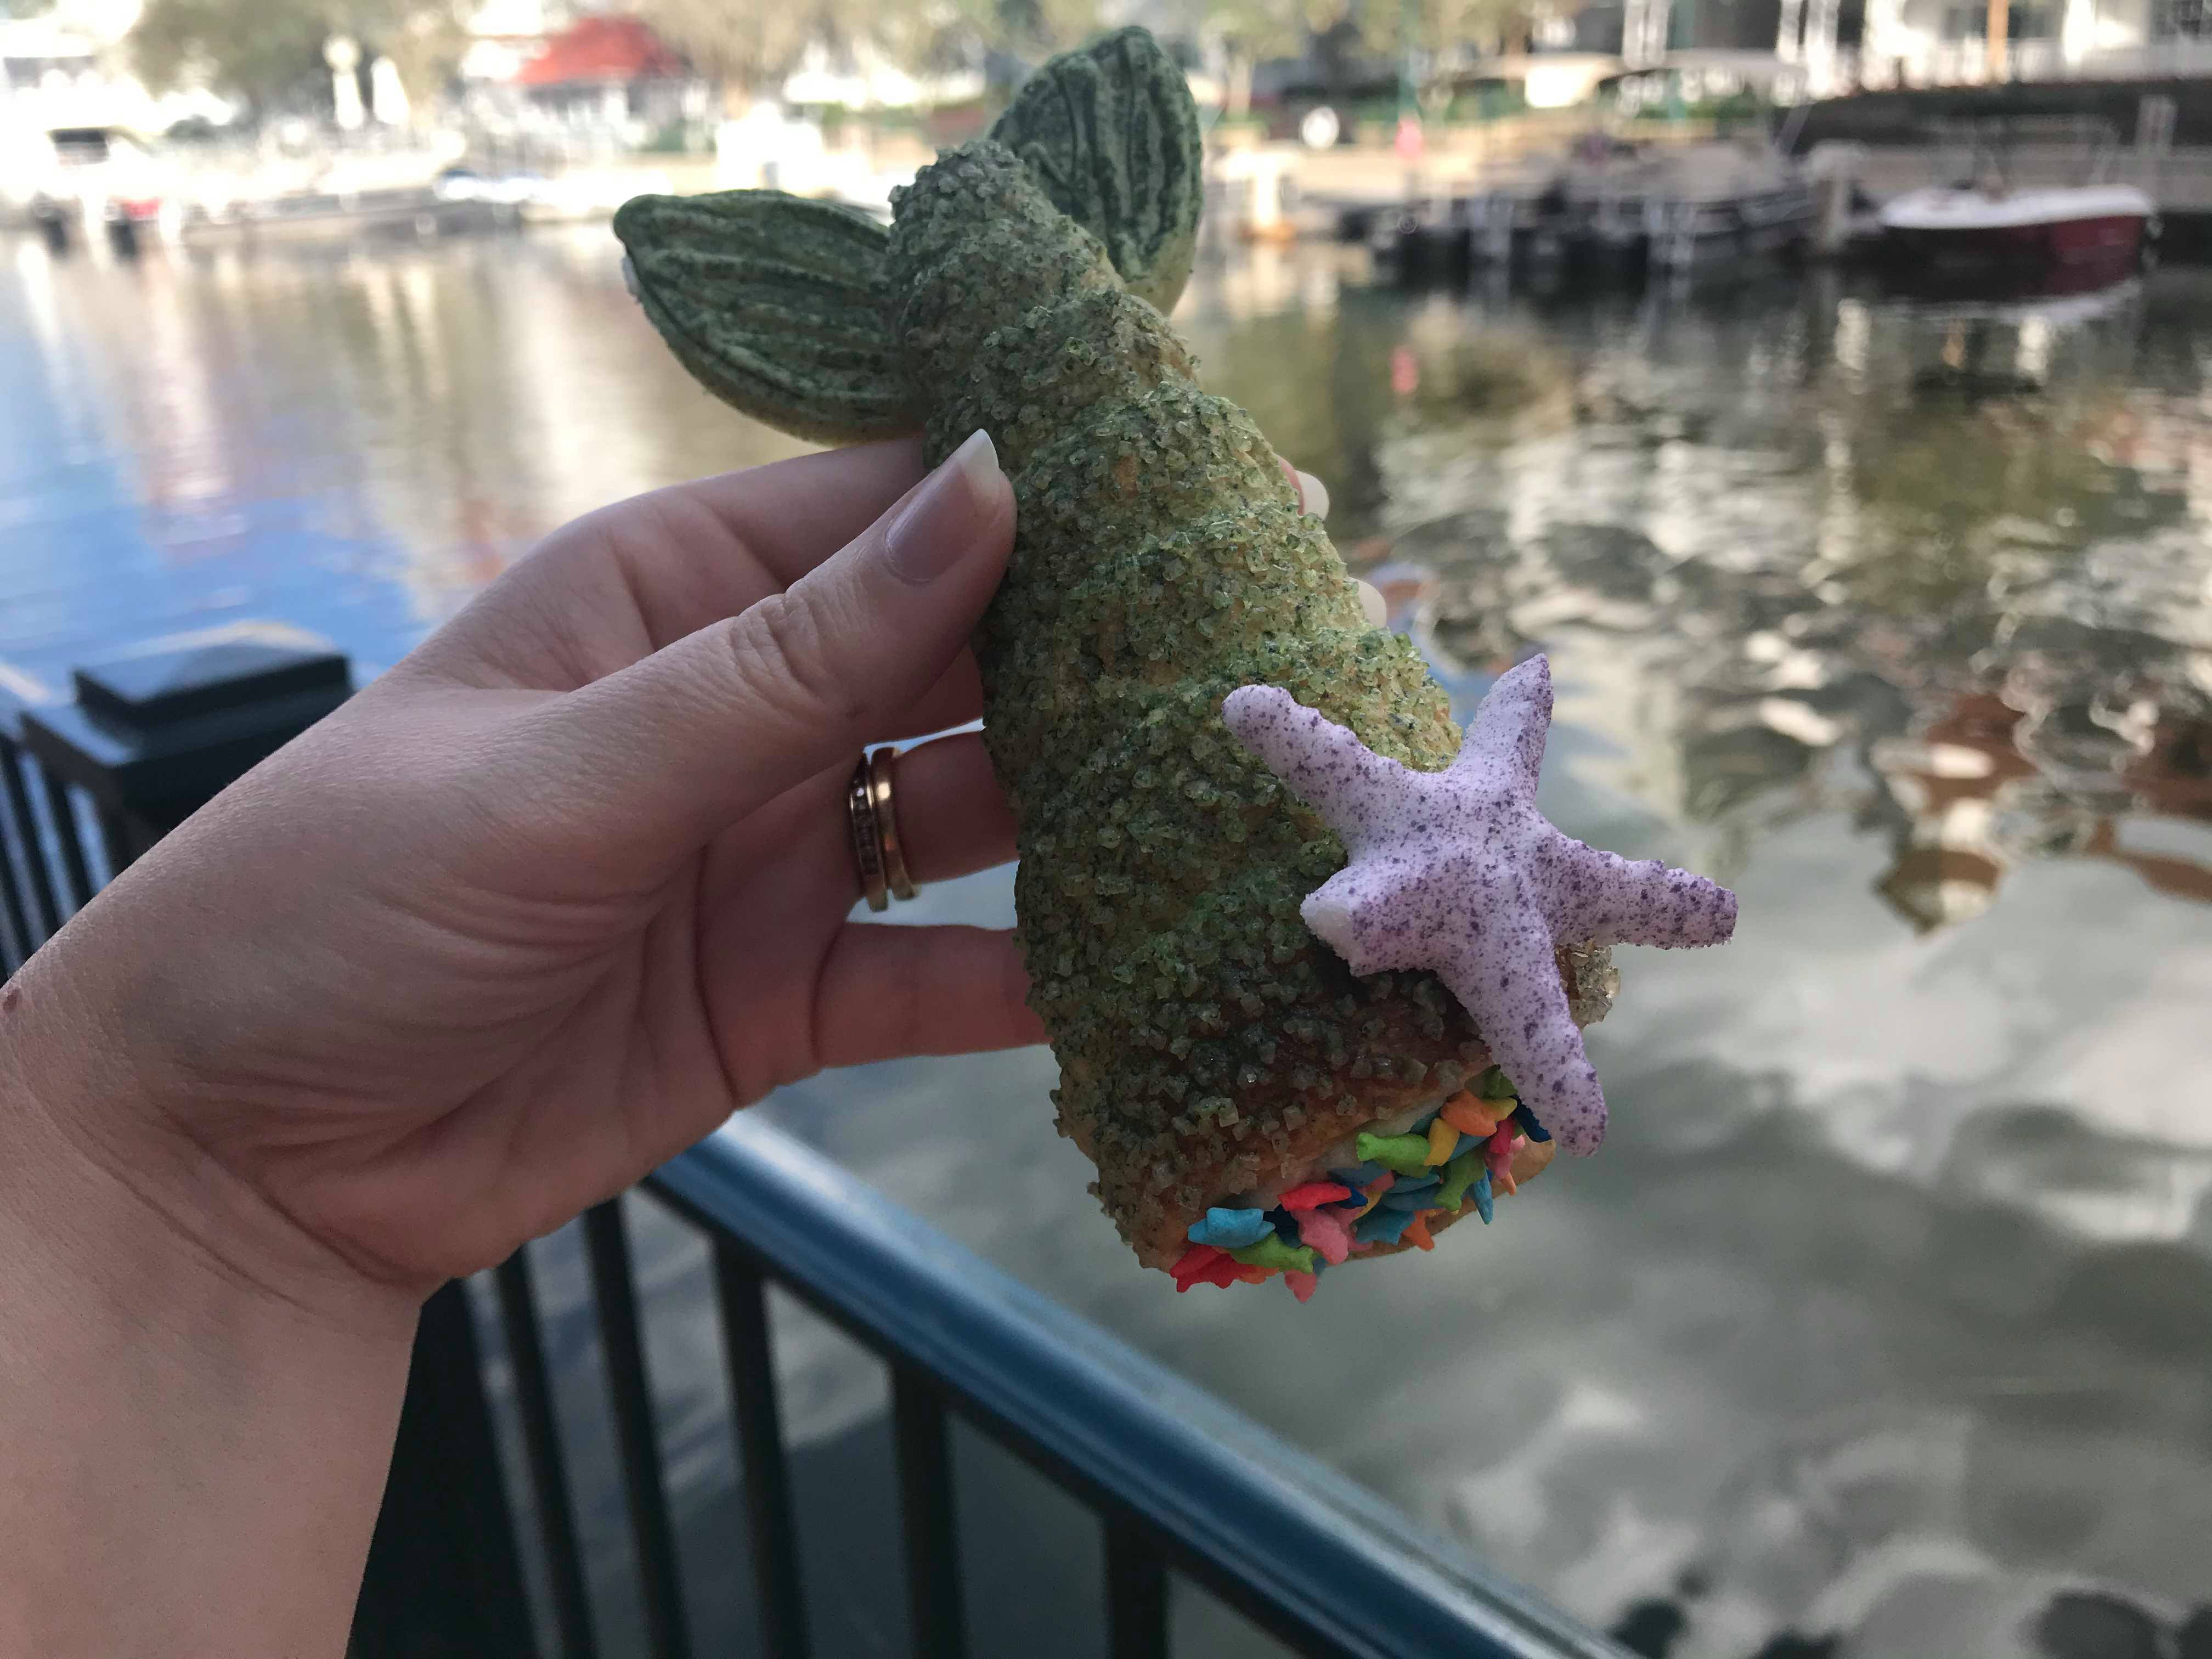 New Mermaid Tail Cream Horn Makes a Splash at Disney’s Grand Floridian Resort